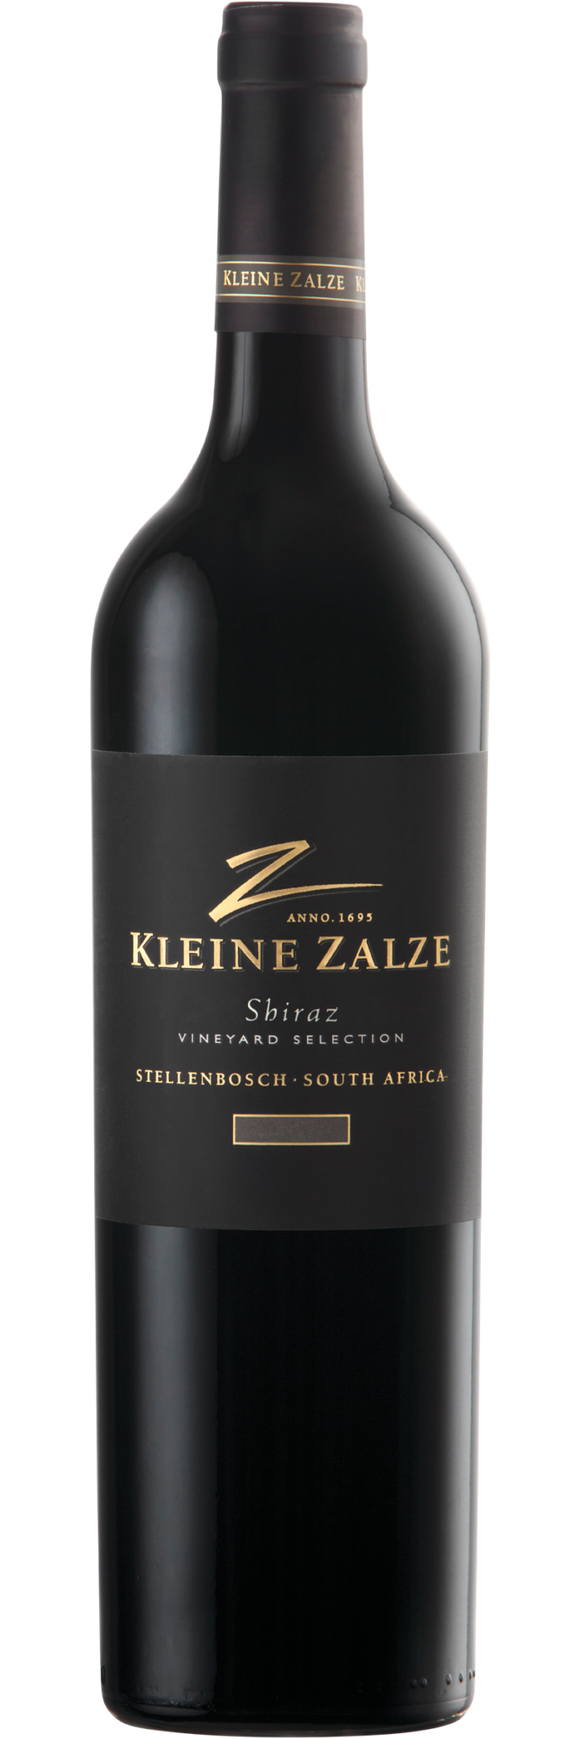 Kleine Zalze, Vineyard Selection Shiraz, 2017